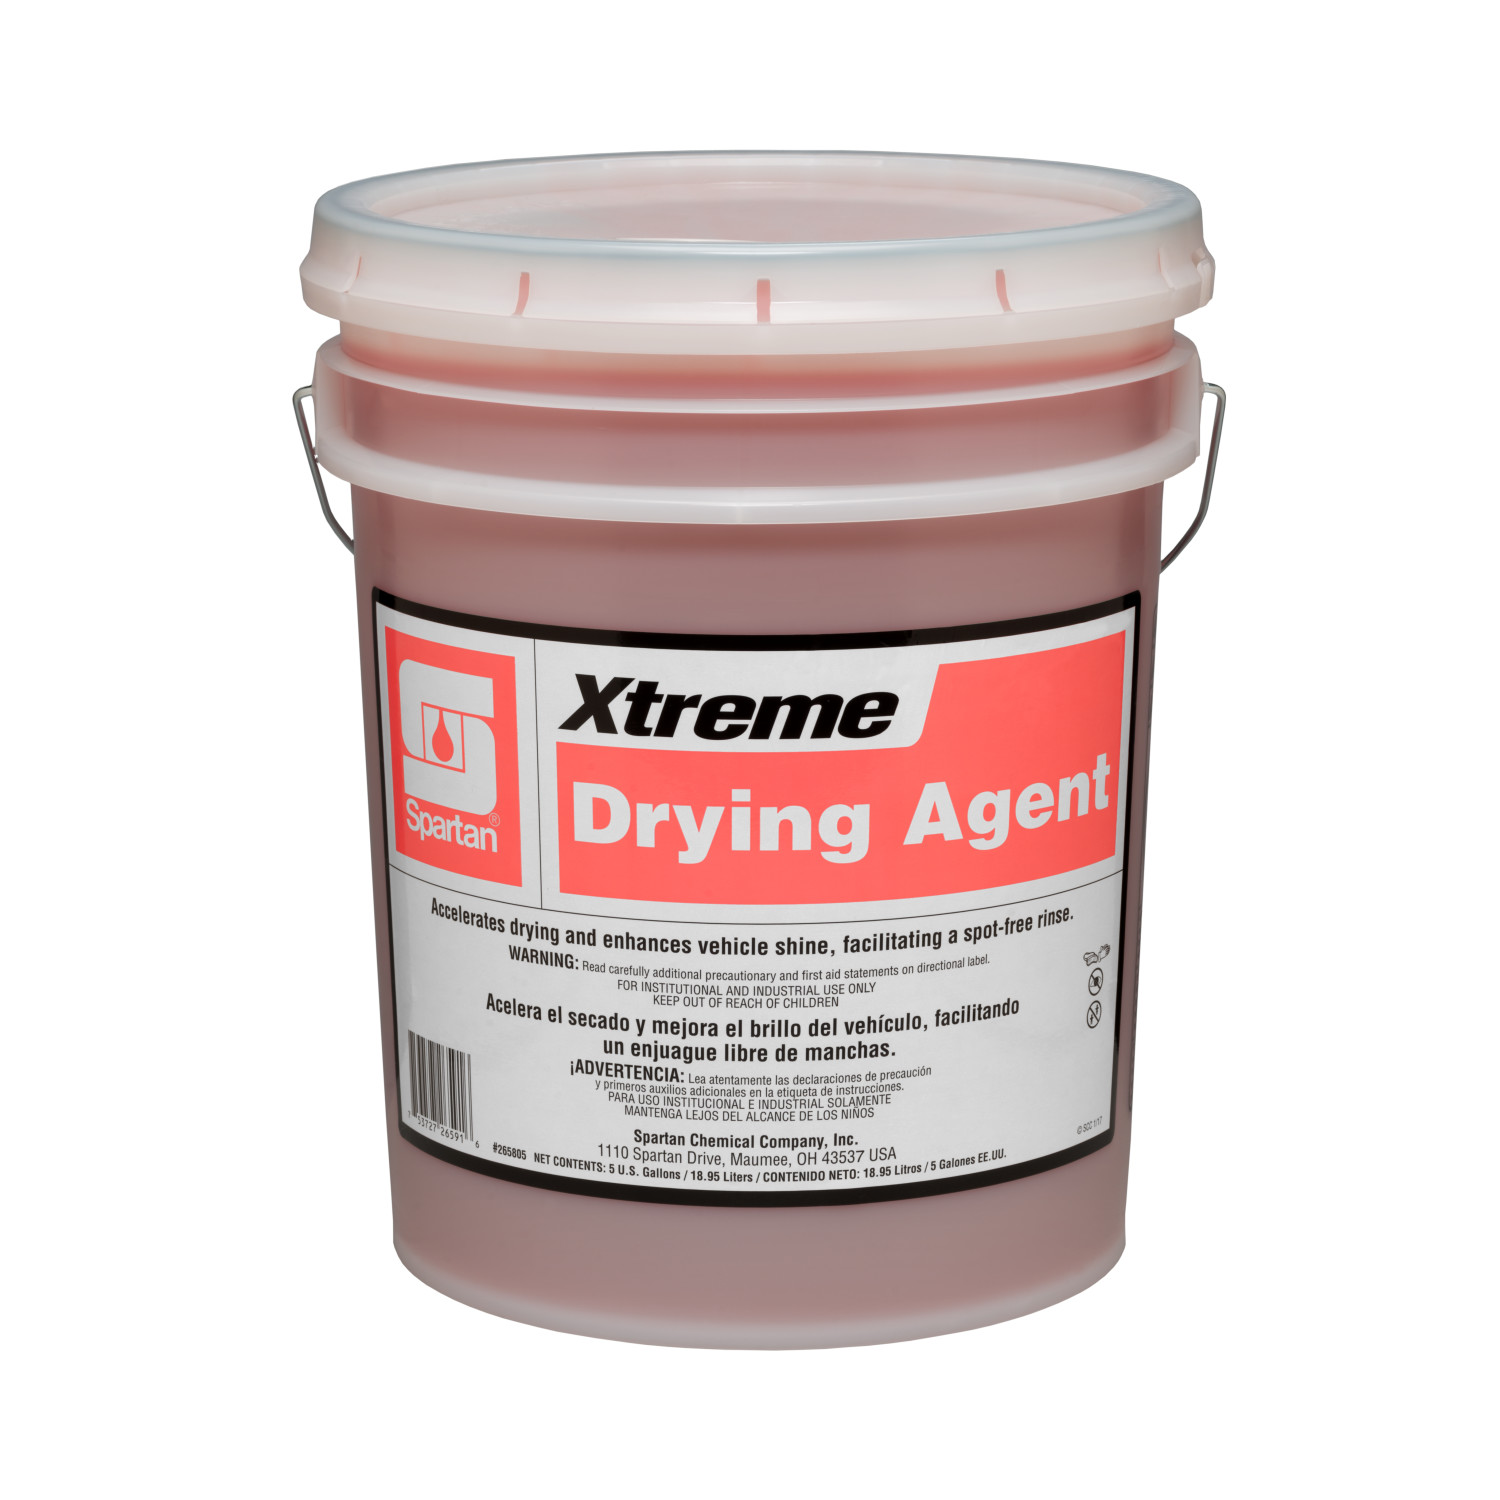 Xtreme® Drying Agent 5 gallon pail